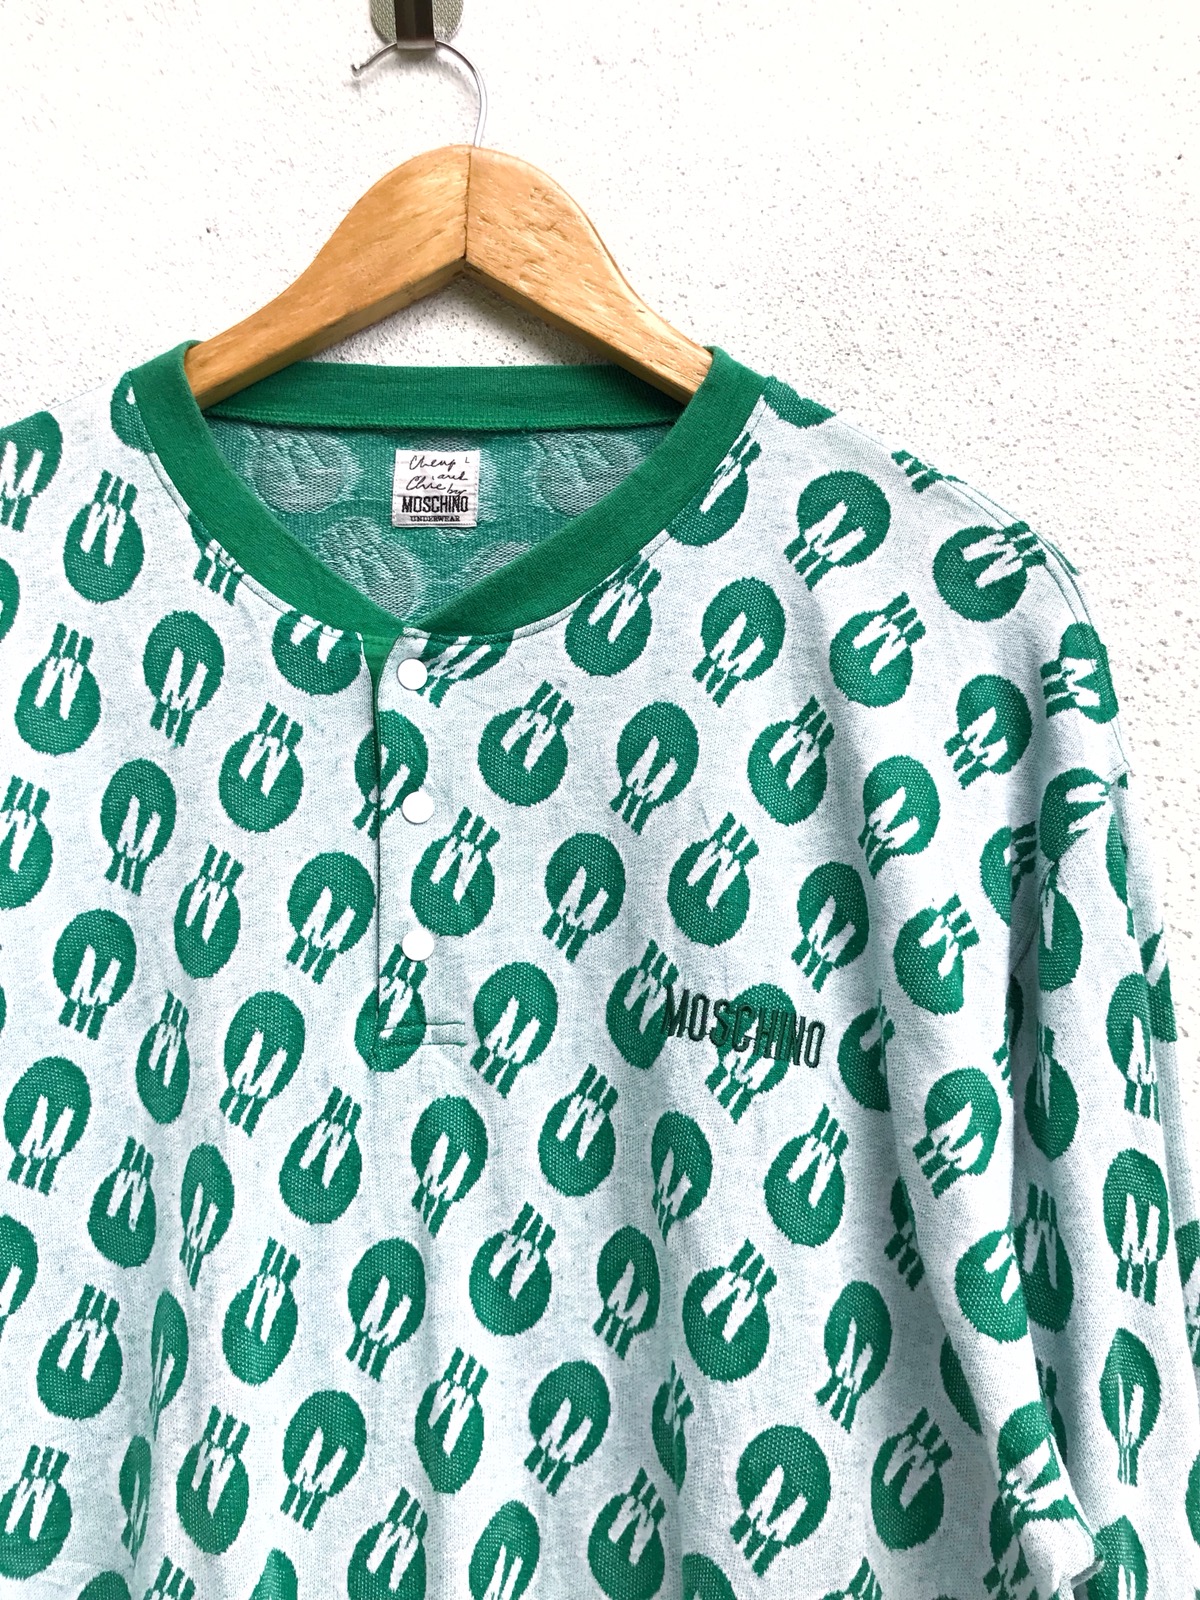 Mochino Cheap & Chic Fullprinted Polka dots Knit Sweatshirt - 2